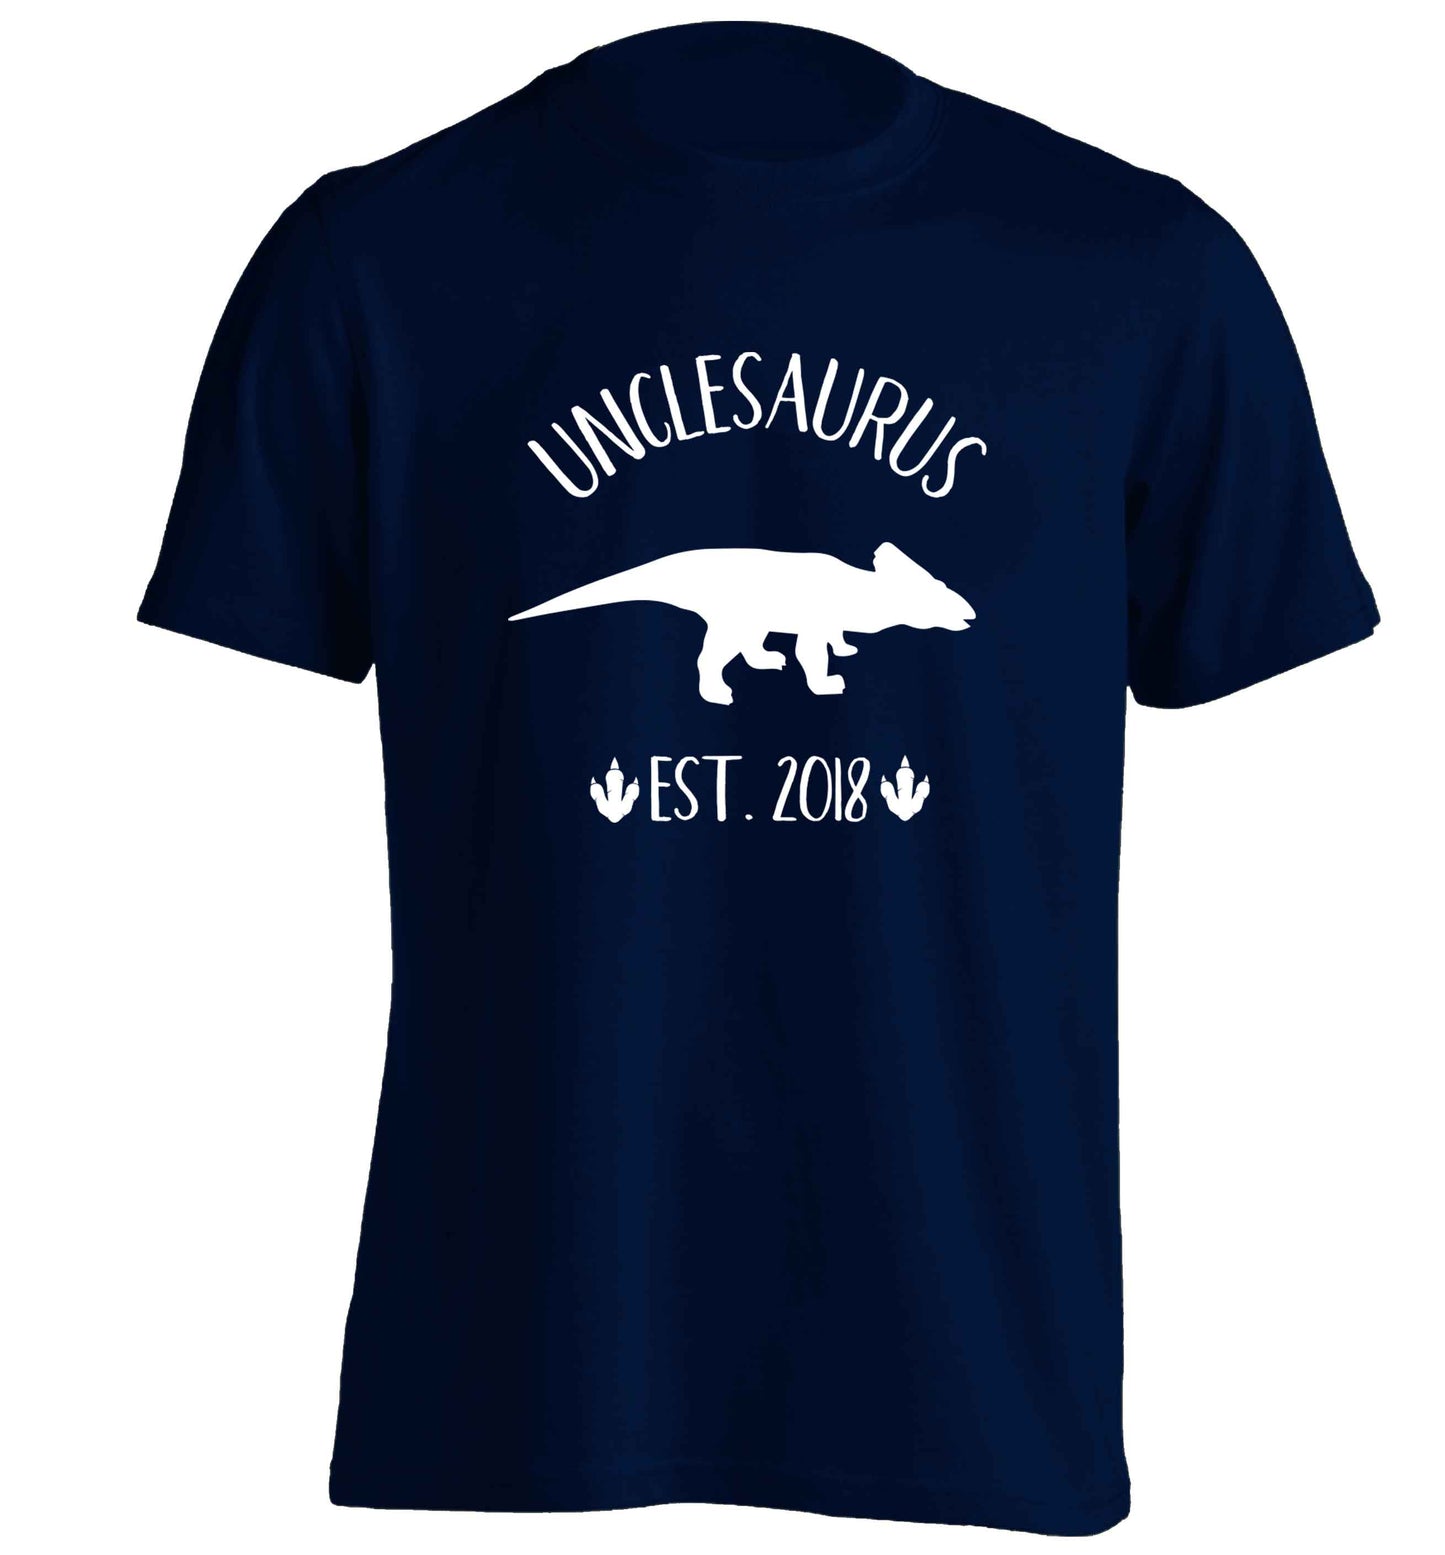 Personalised unclesaurus since (custom date) adults unisex navy Tshirt 2XL